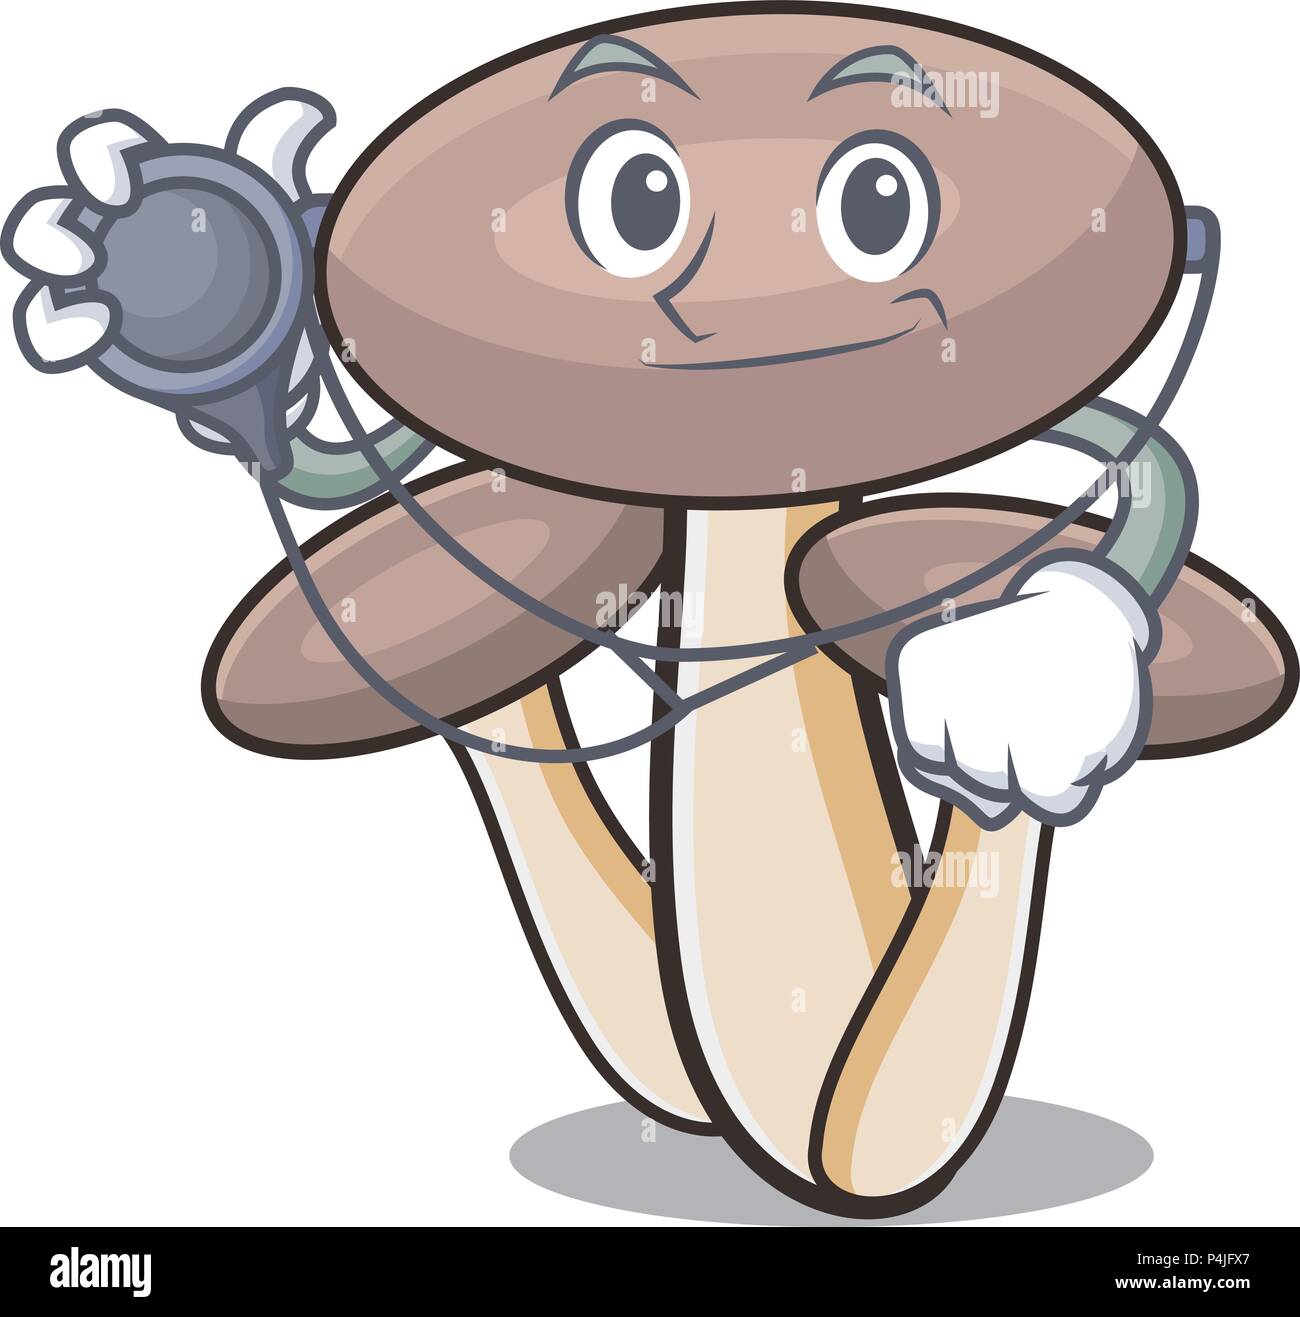 Doctor honey agaric mushroom character cartoon Stock Vector